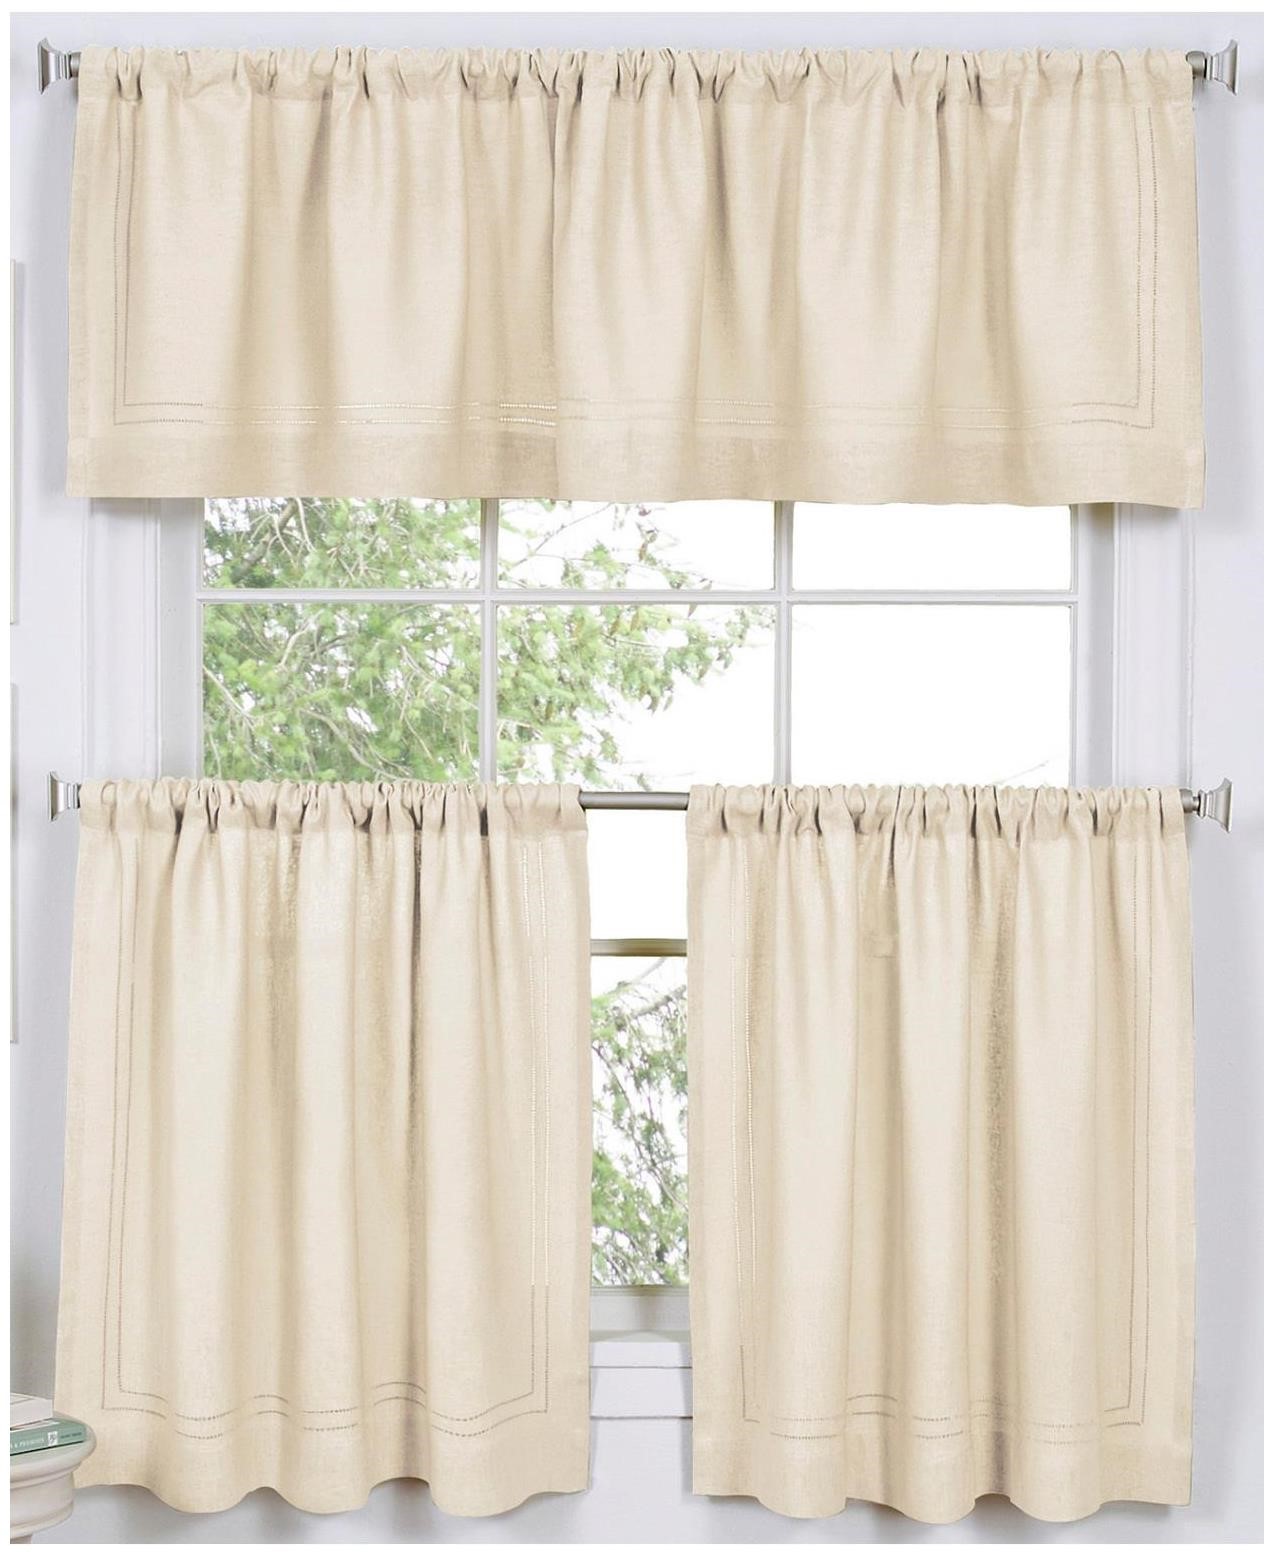 7 Linen Kitchen Curtains - ZCAZ MILLIE WALLS'S BLOG